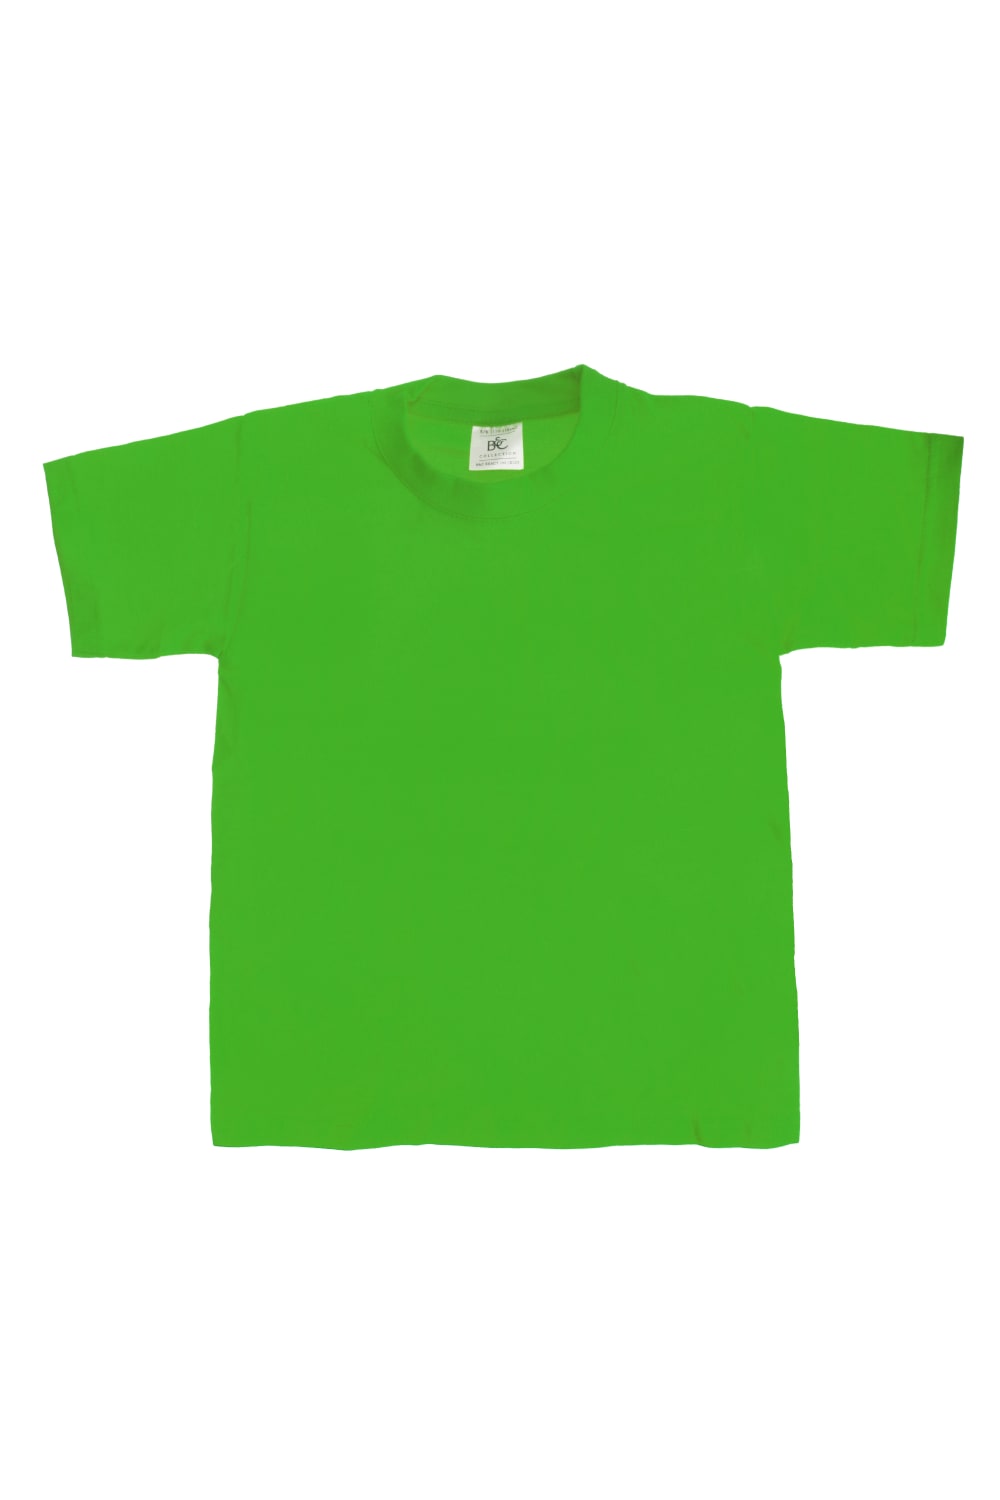 B&C Big Boys Kids/Childrens Exact 190 Short Sleeved T-Shirt (Kelly Green)